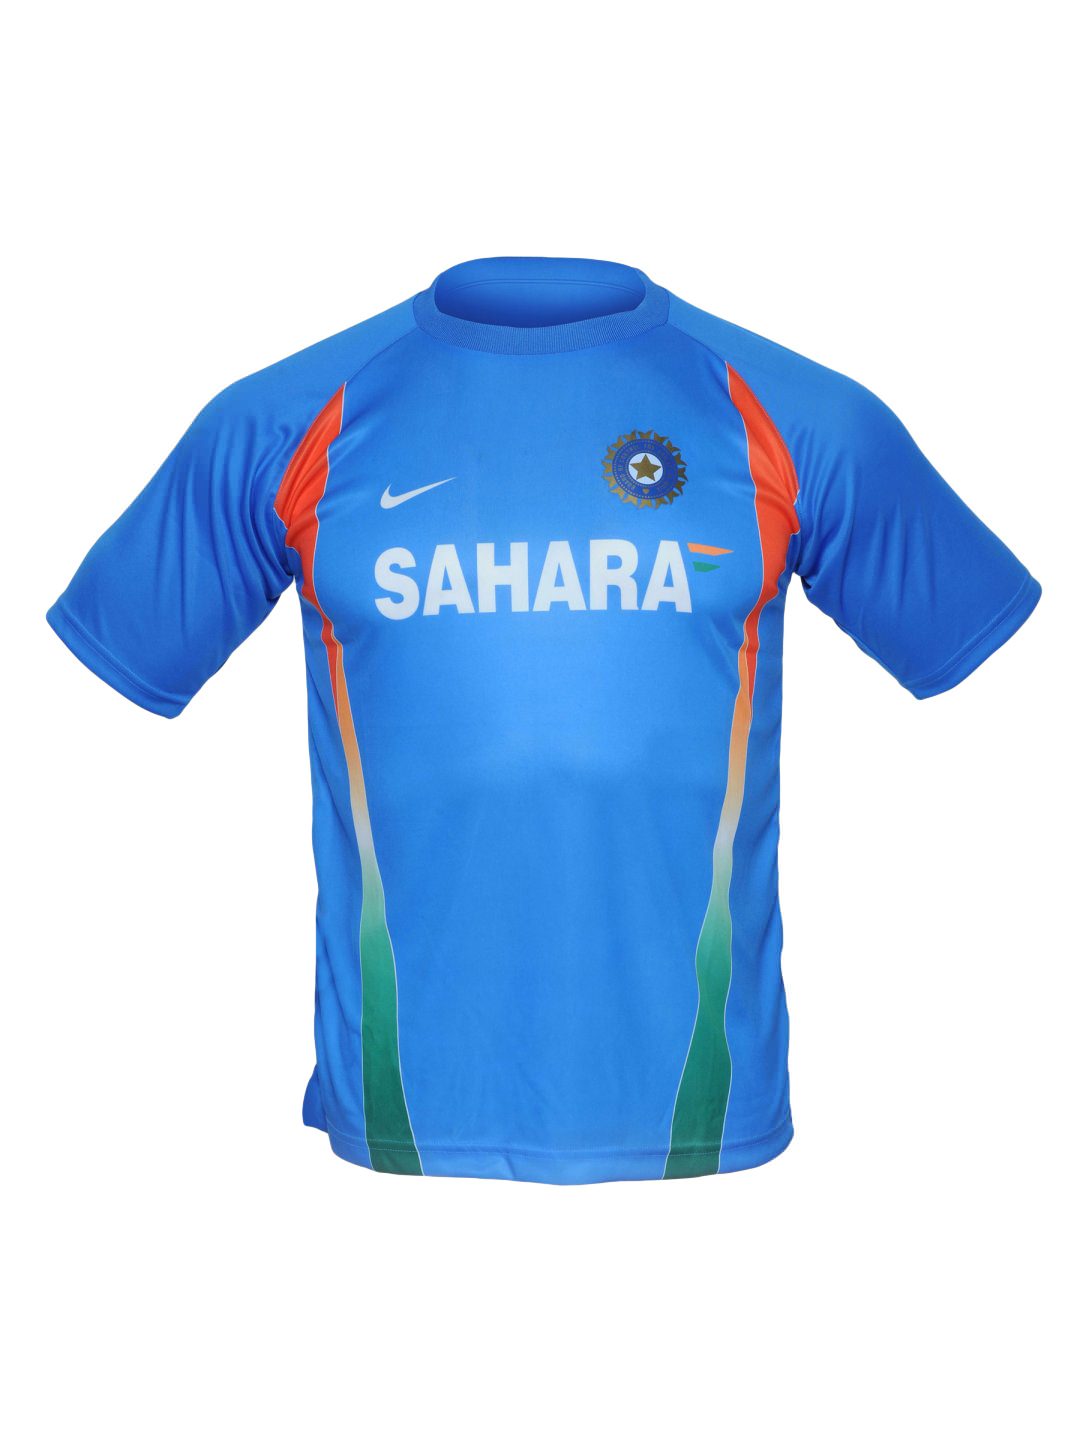 myntra indian cricket team jersey